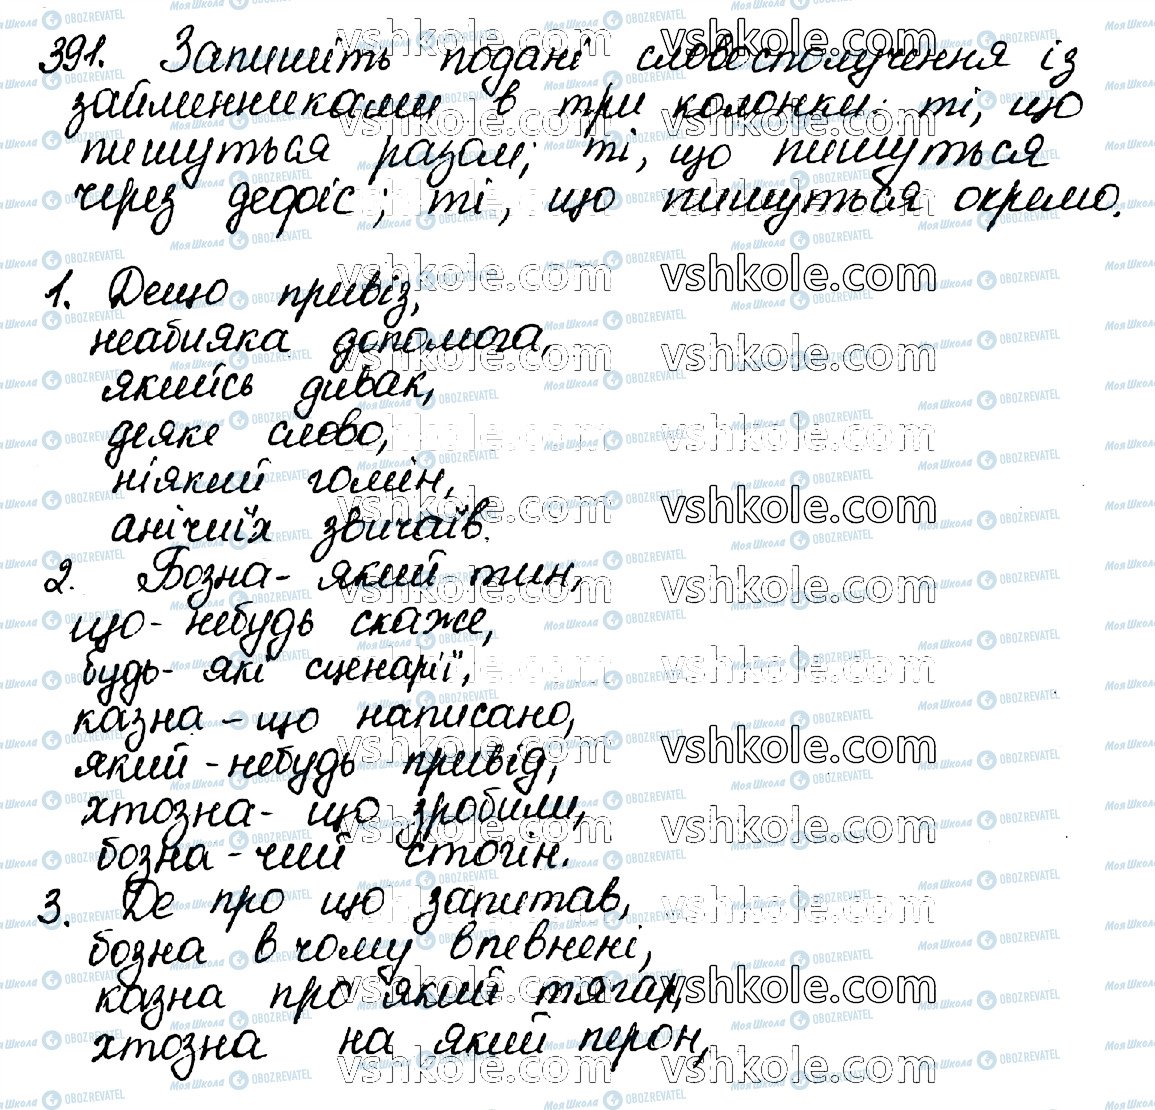 ГДЗ Укр мова 10 класс страница 391